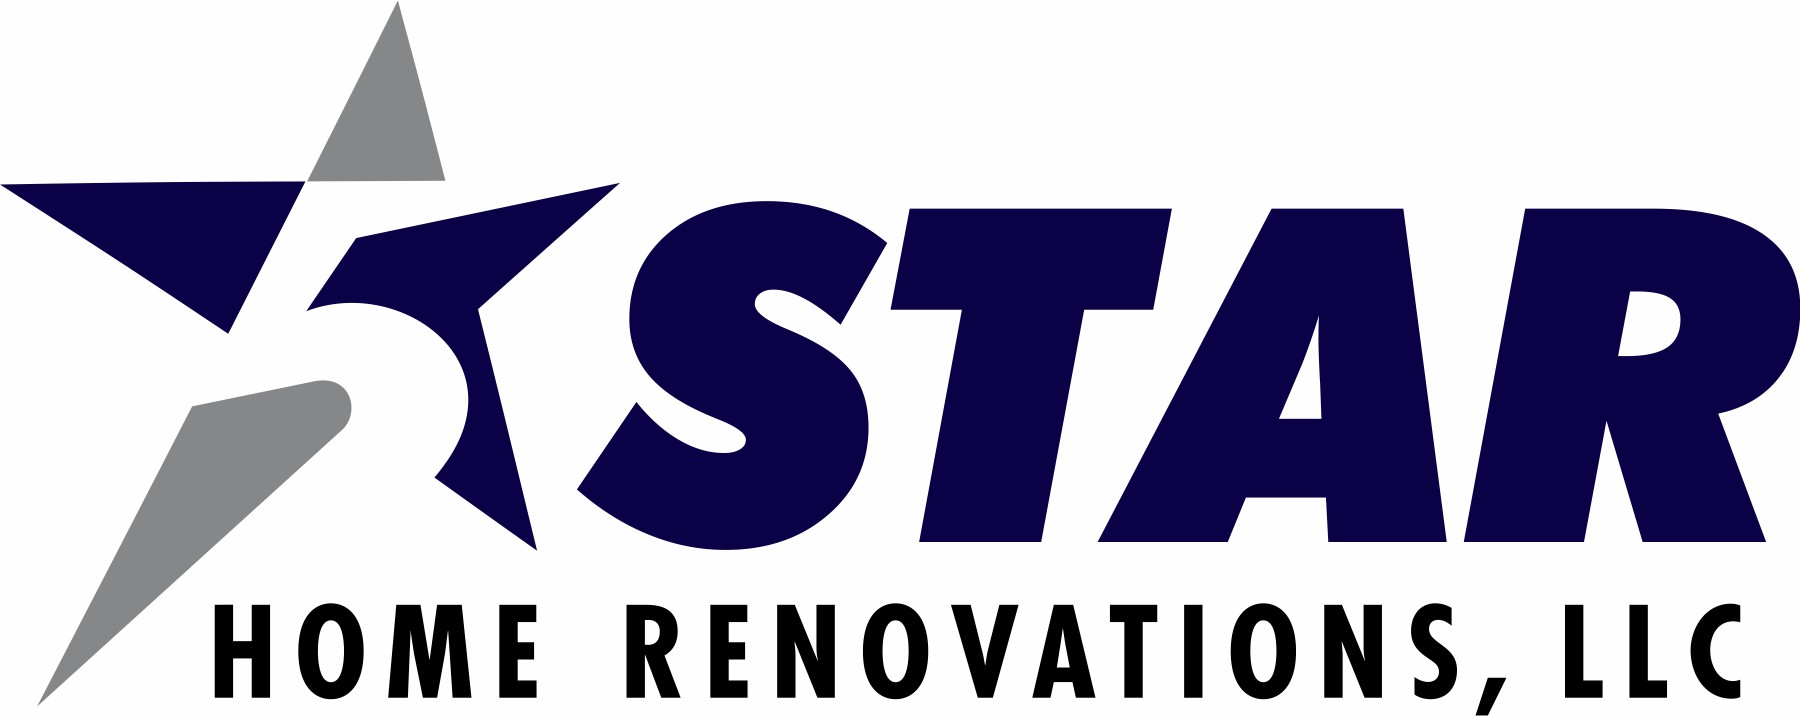 5 Star Home Renovations LLC Logo